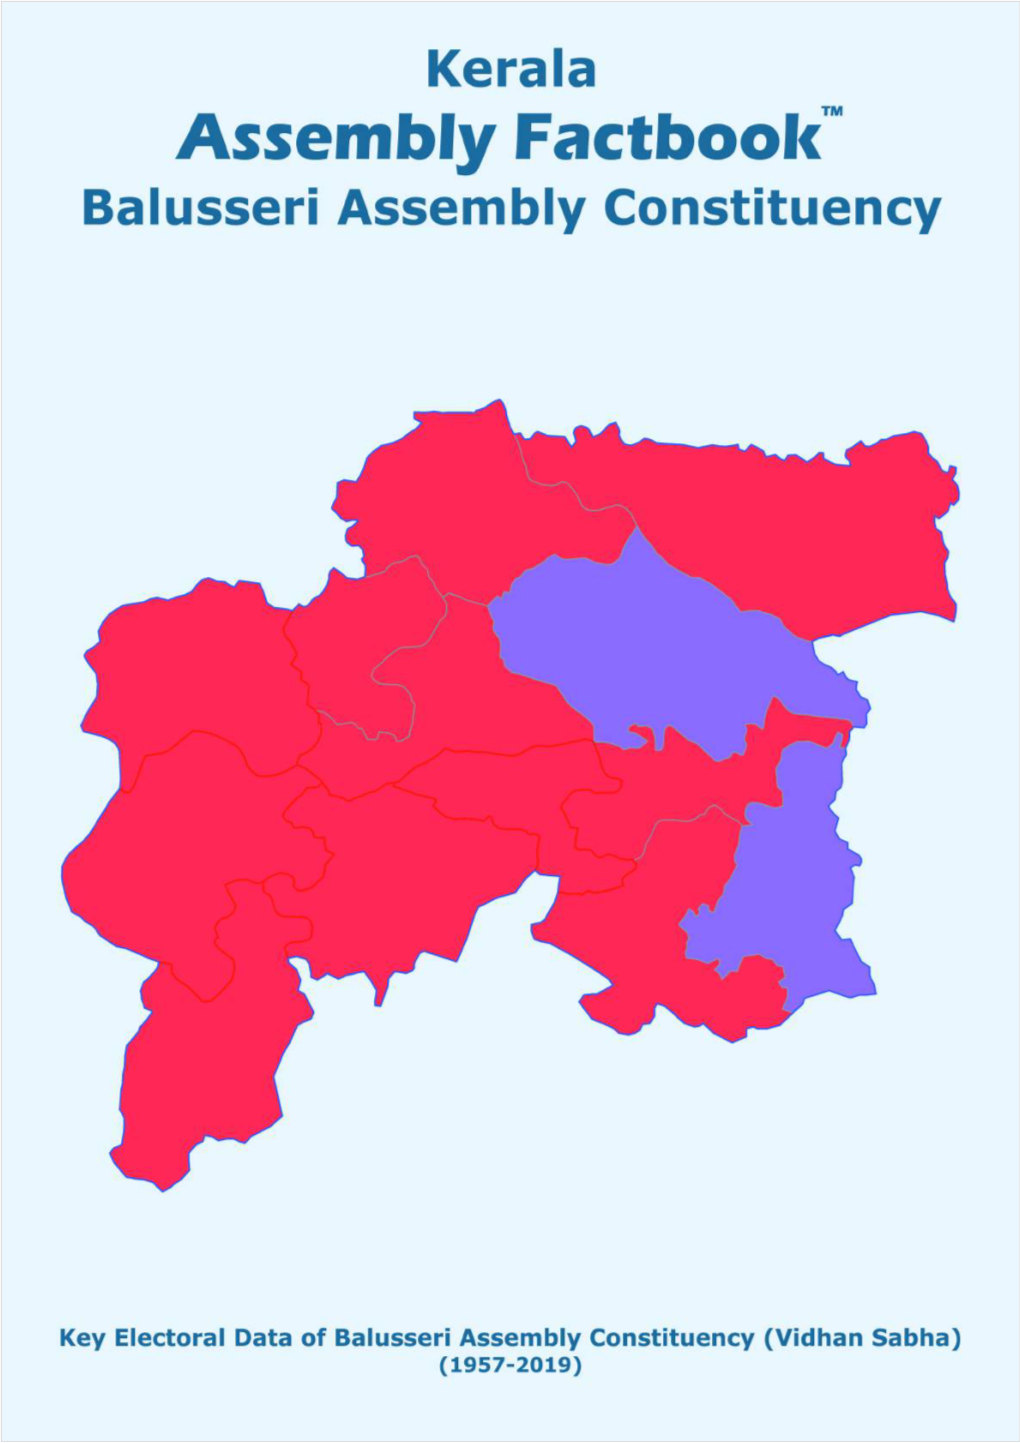 Balusseri Assembly Kerala Factbook